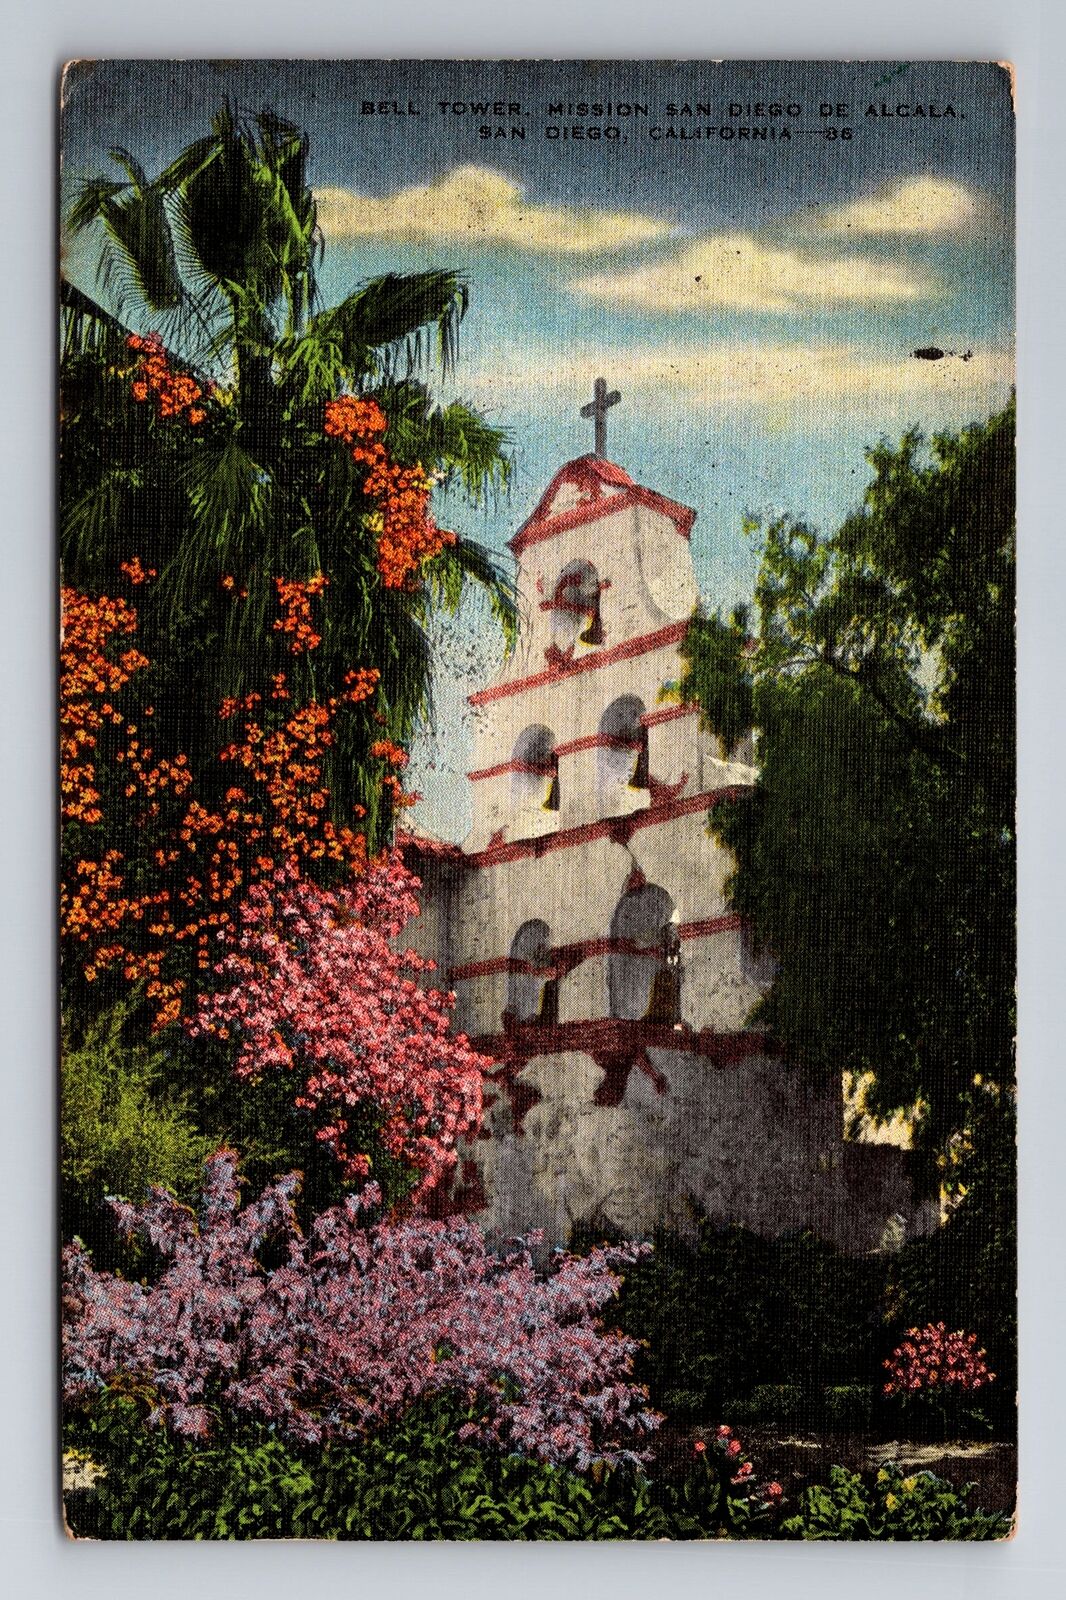 San Diego CA-California, Bell Tower, Mission San Diego, c1951 Vintage Postcard